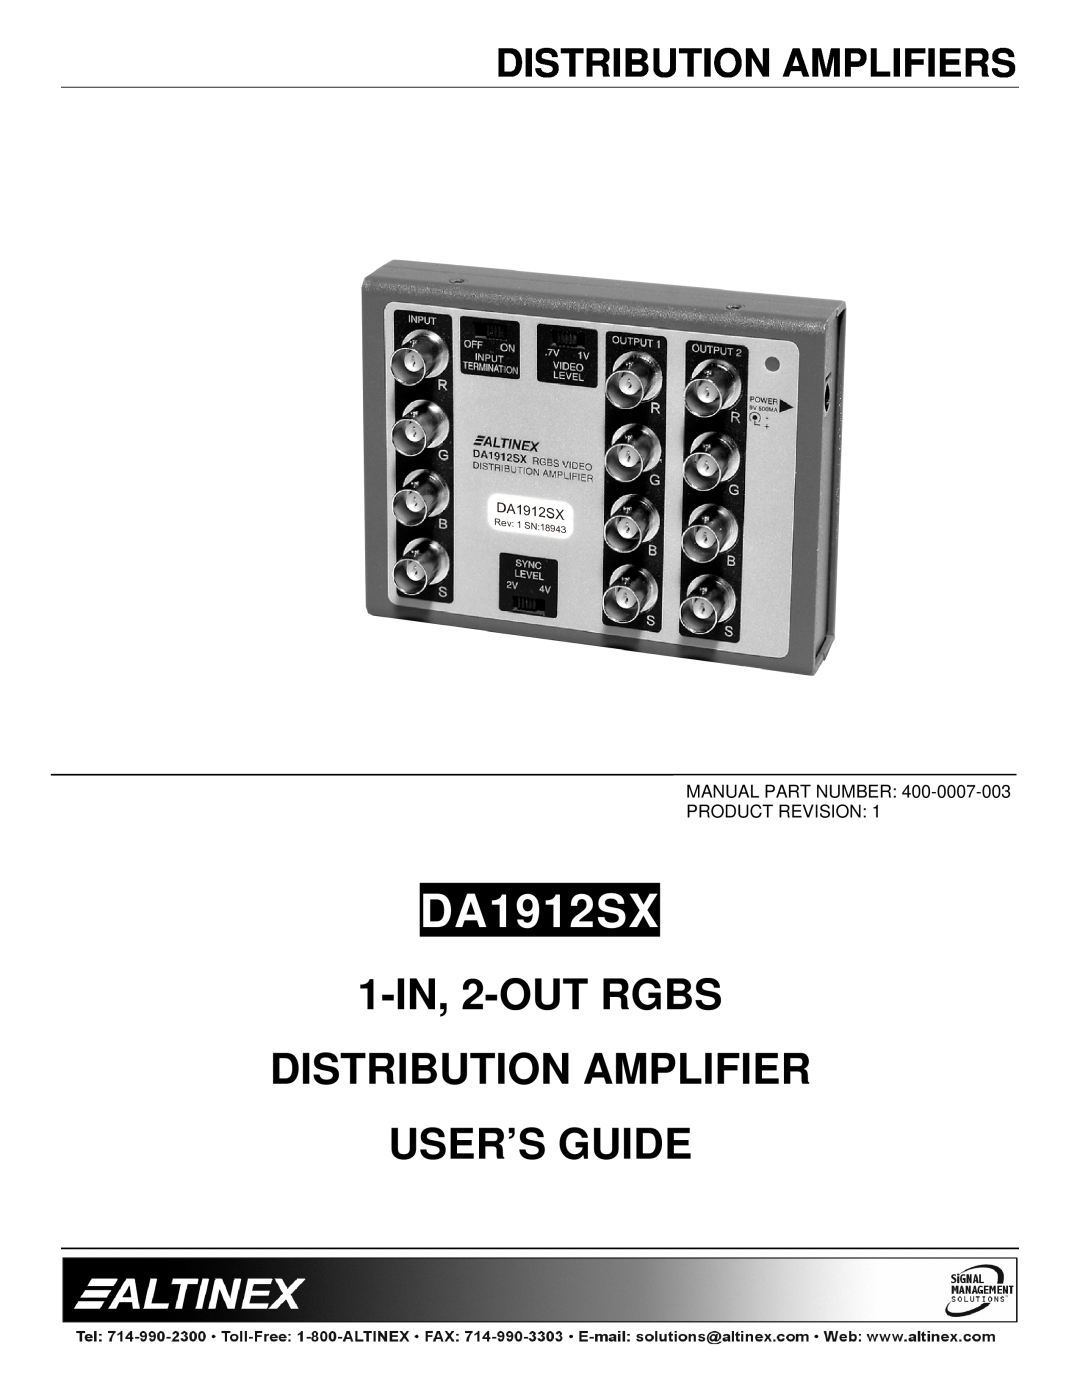 Altinex DA1912SX manual Distribution Amplifiers, 1-IN, 2-OUTRGBS DISTRIBUTION AMPLIFIER, User’S Guide 